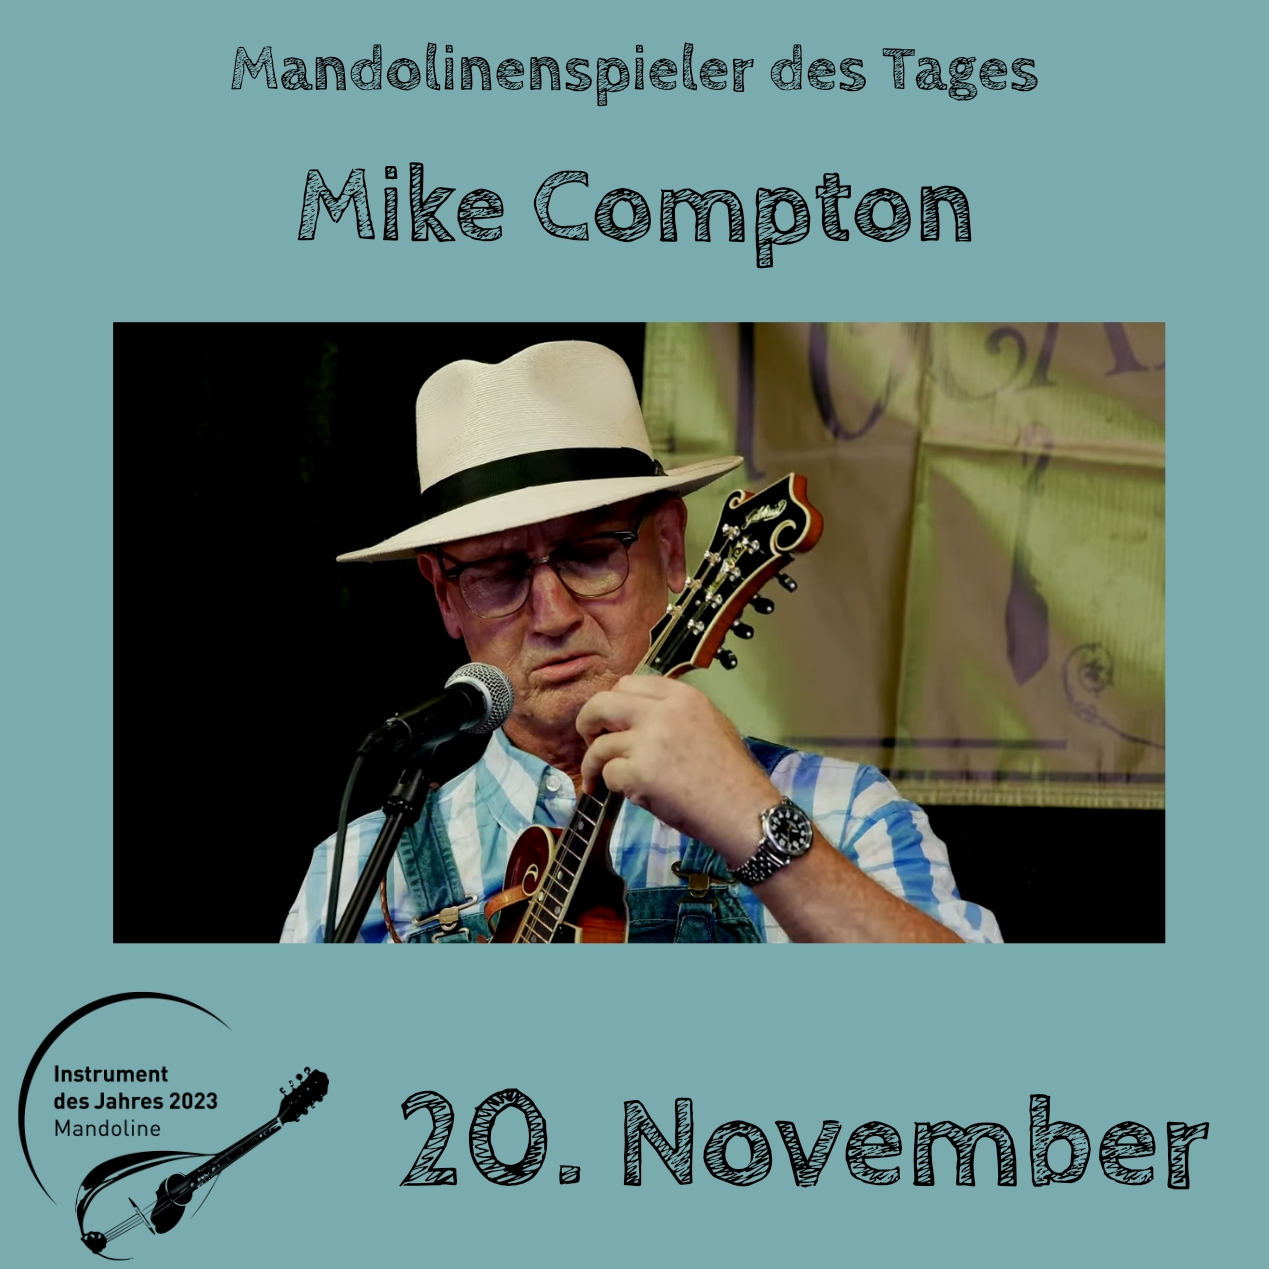 20. November - Mike Compton Instrument des Jahres 2023 Mandolinenspieler Mandolinenspielerin des Tages